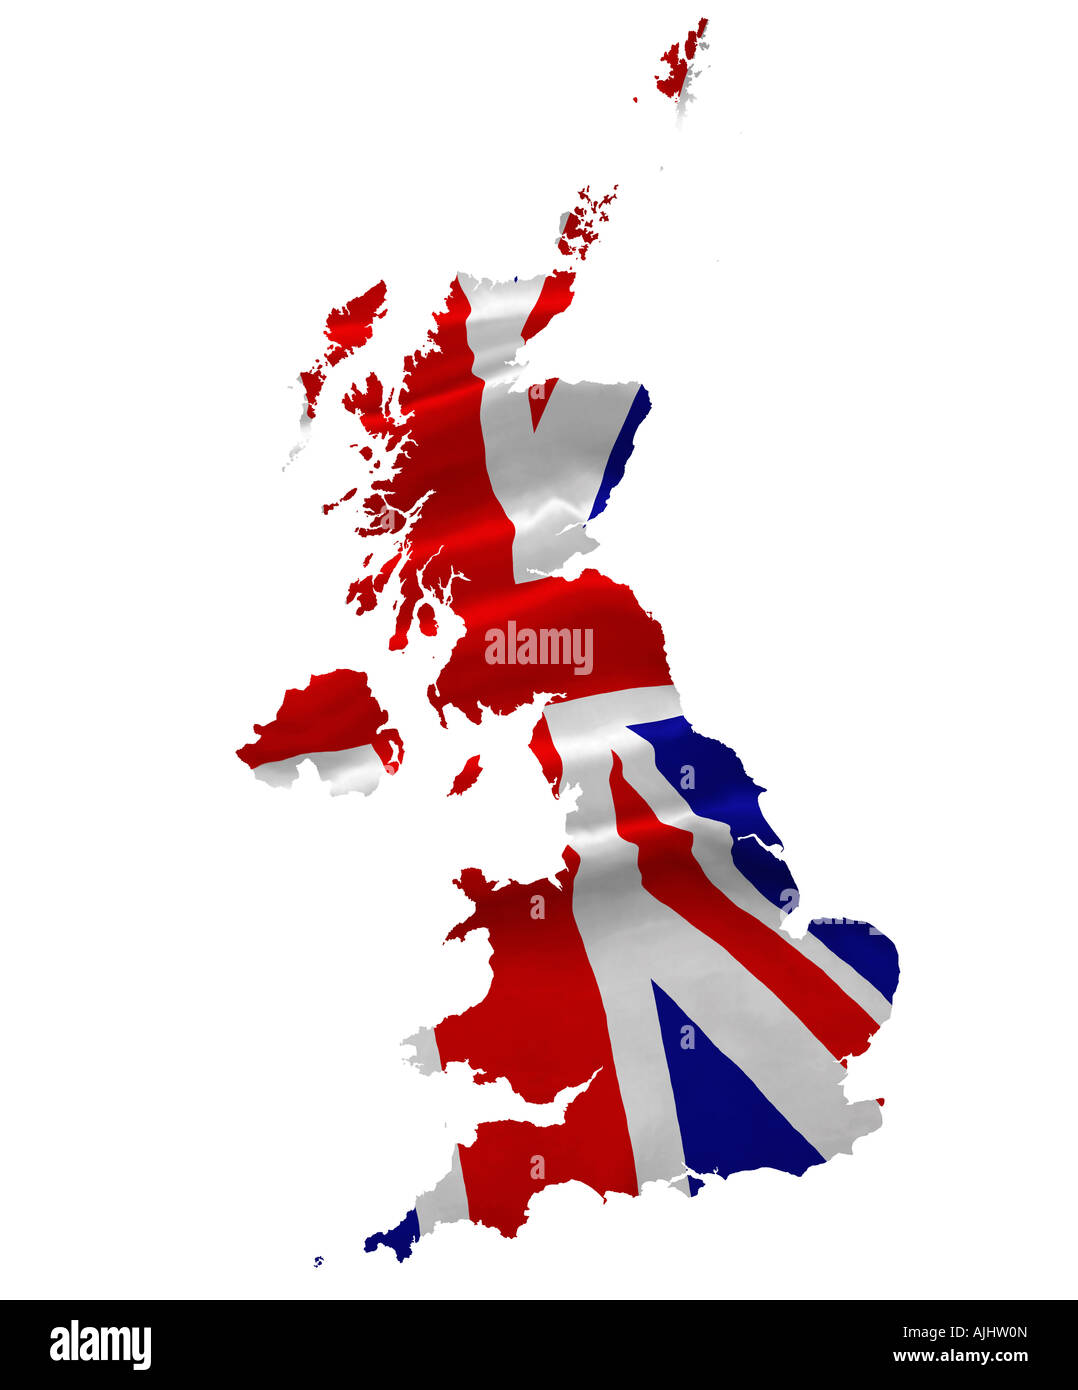 United Kingdom map and Union Jack flag concept. National flag of the United Kingdom Stock Photo